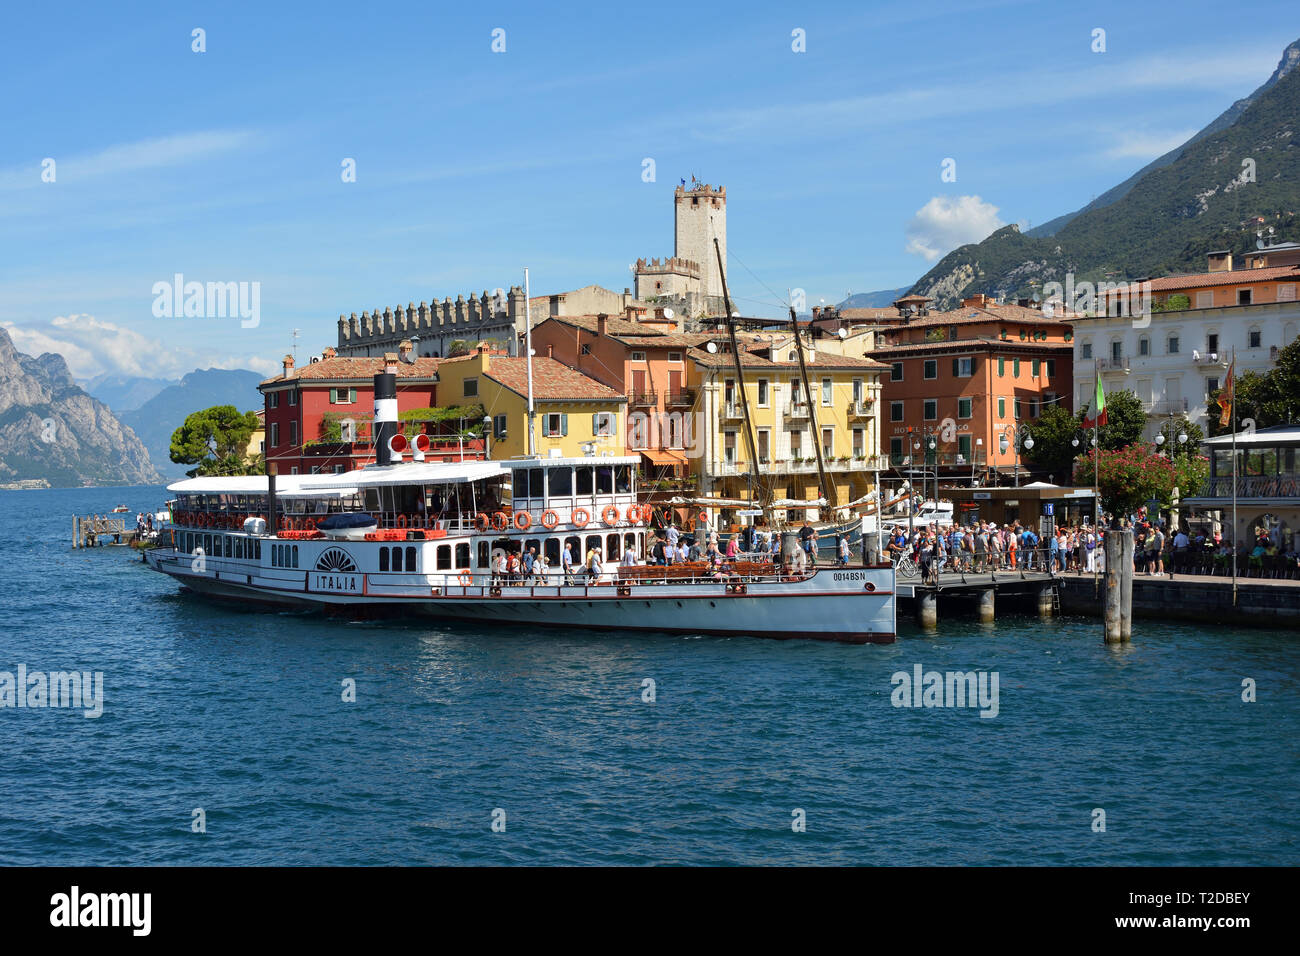 Passenger ship in the Harbor of Malcesine on Lake Garda - Italy. Stock Photo